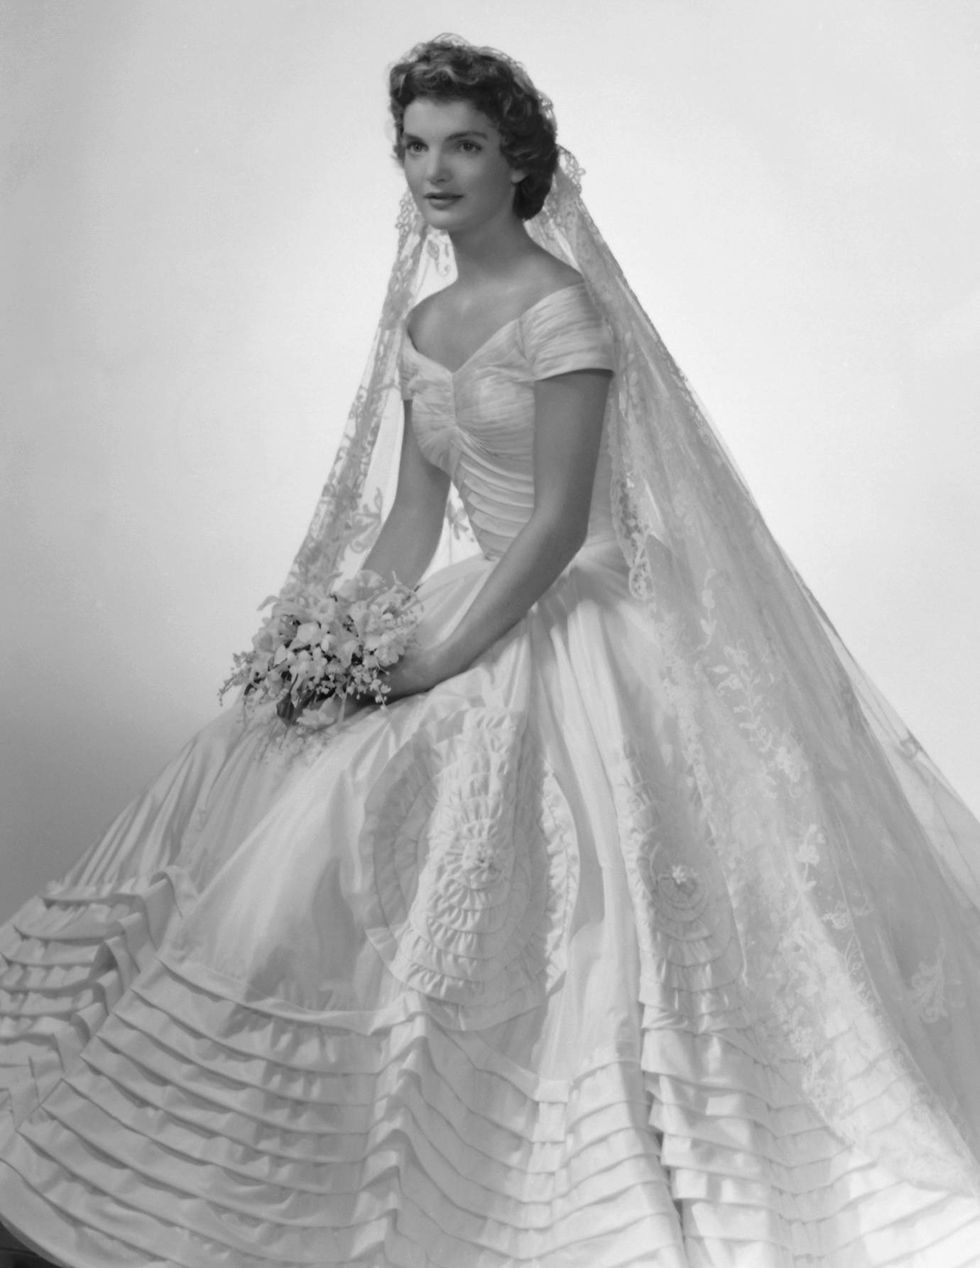 Jacqueline Kennedy’s Wedding dress